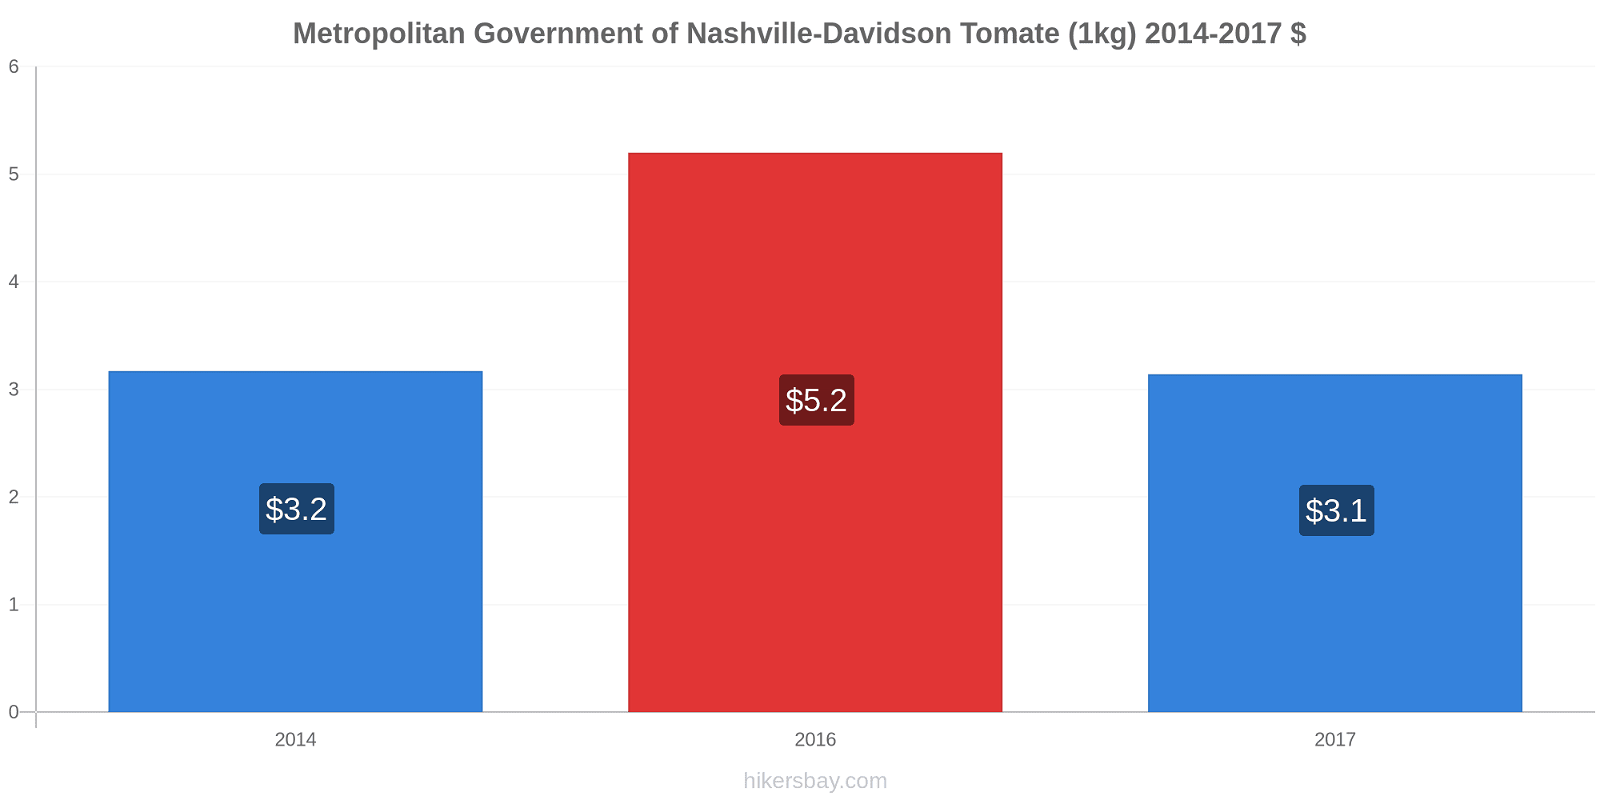 Metropolitan Government of Nashville-Davidson changements de prix Tomate (1kg) hikersbay.com